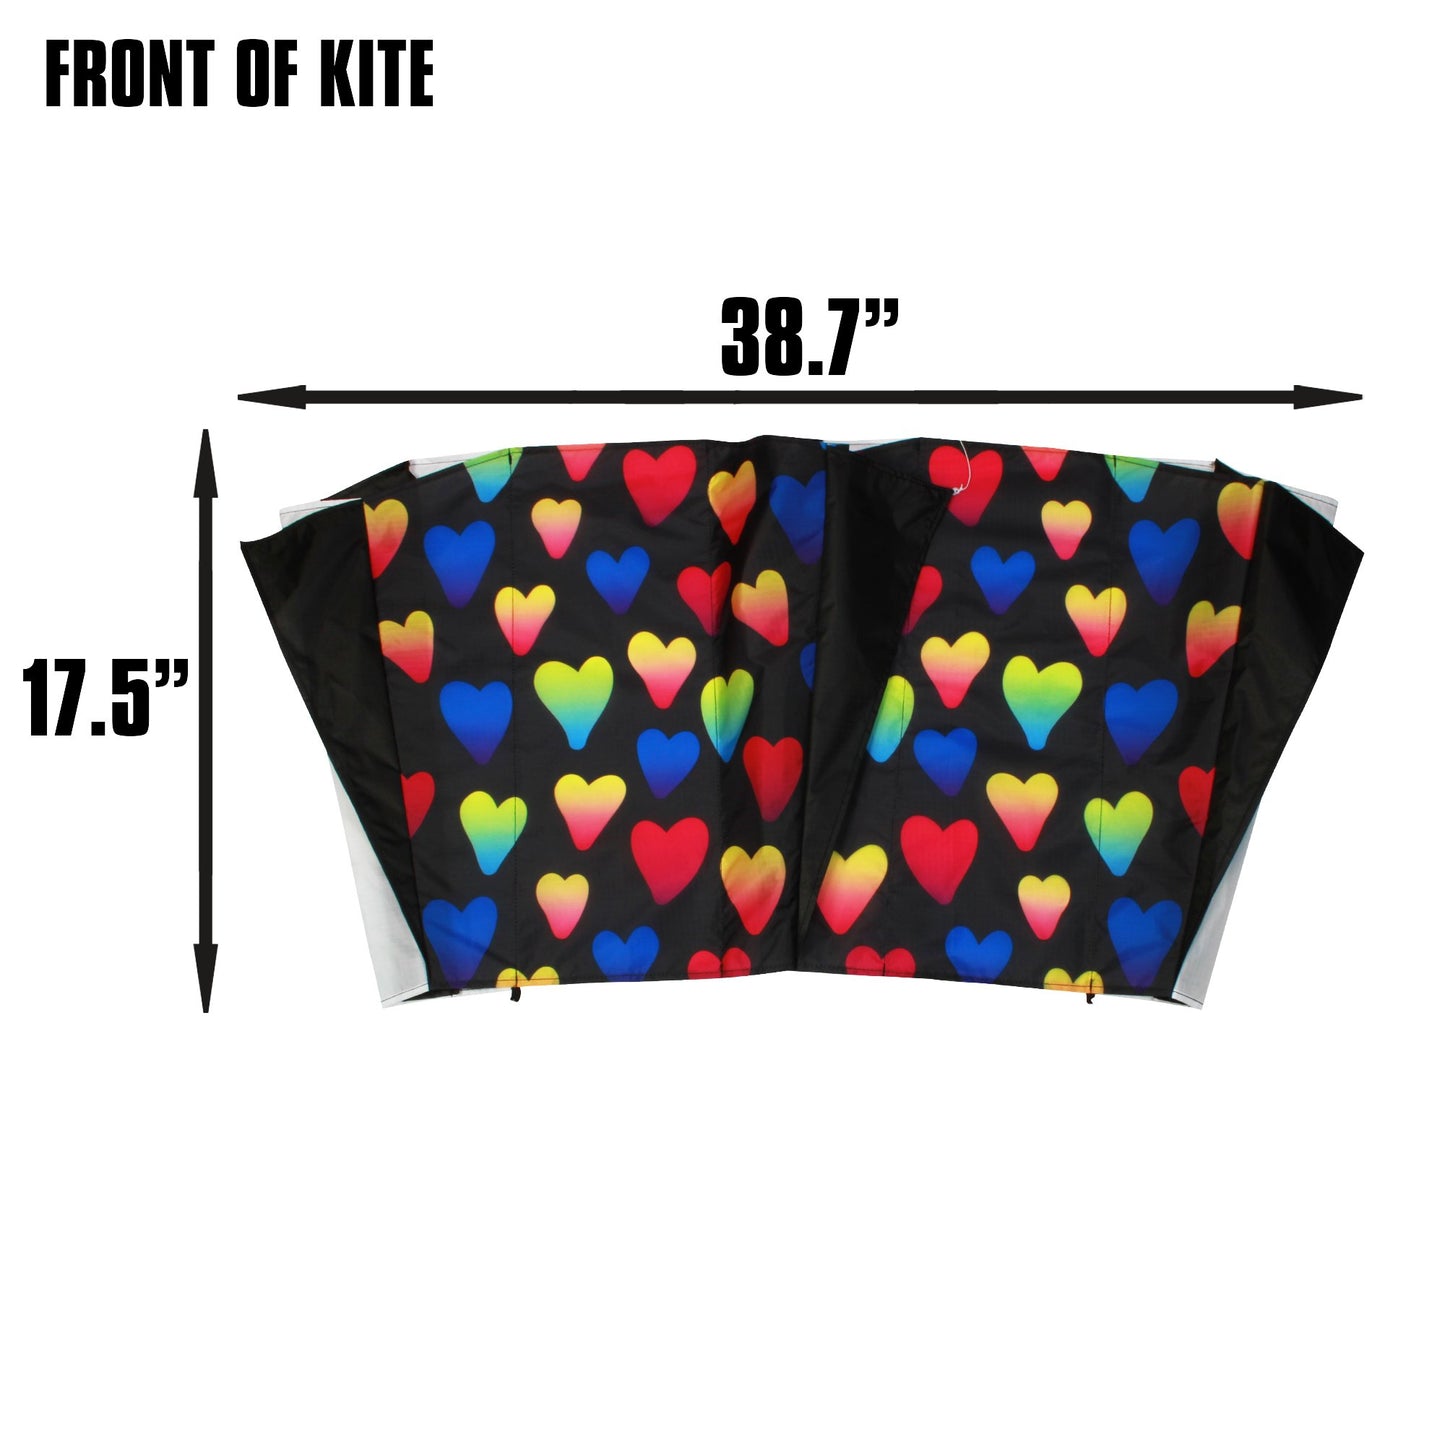 X Kites SkyFoil Hearts Nylon Kite dimensions